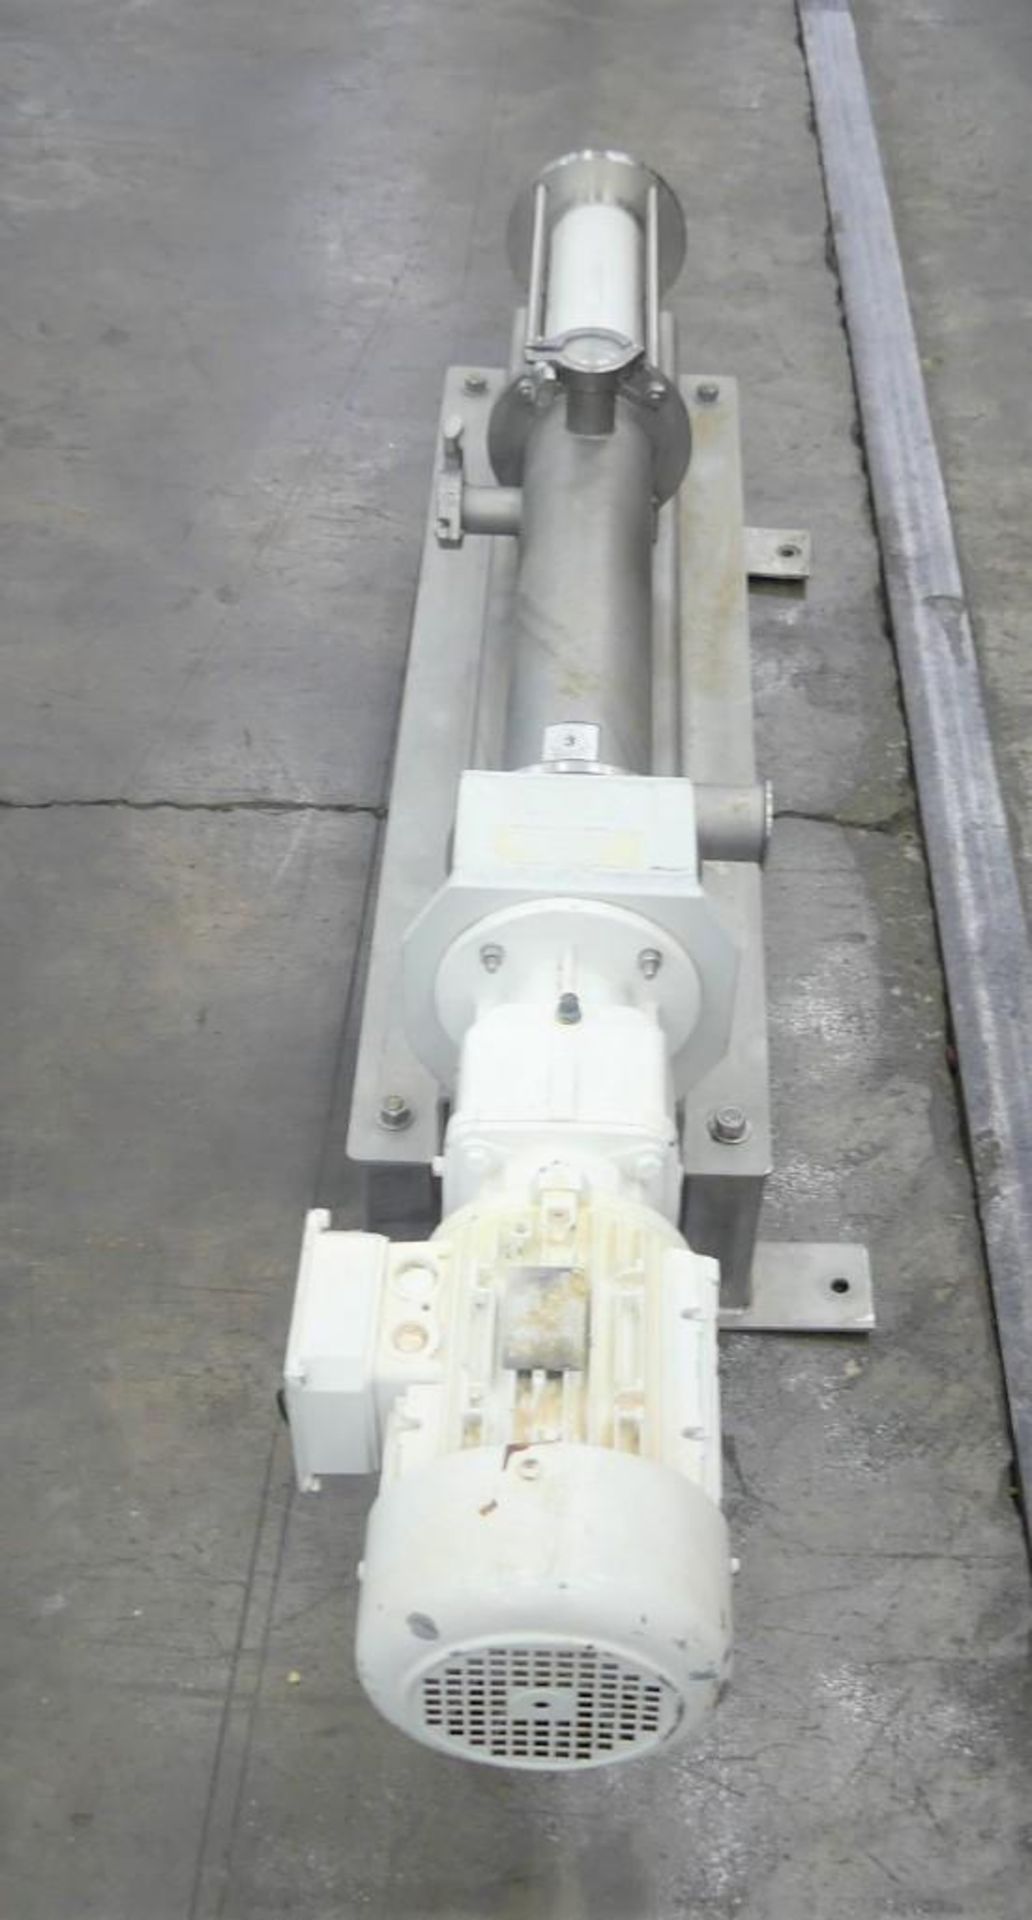 Stainless Steel Seepex Pump Mounted on Skid - Image 2 of 3